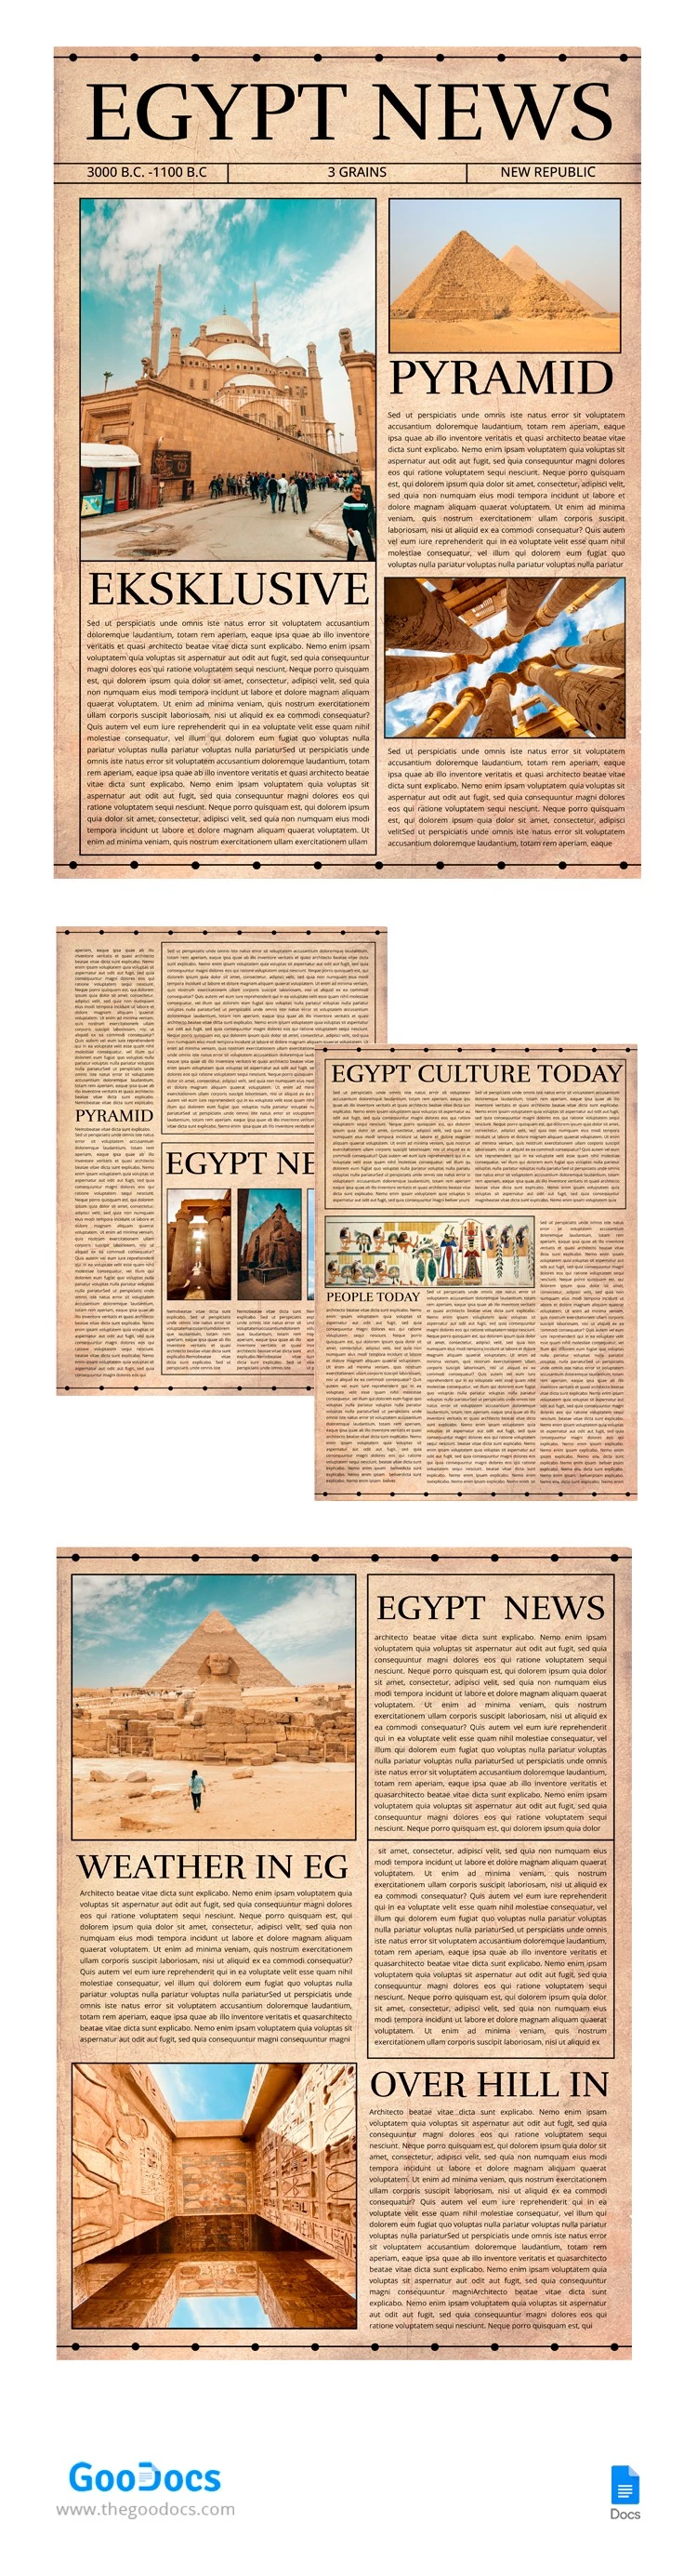 埃及报纸 - free Google Docs Template - 10065740